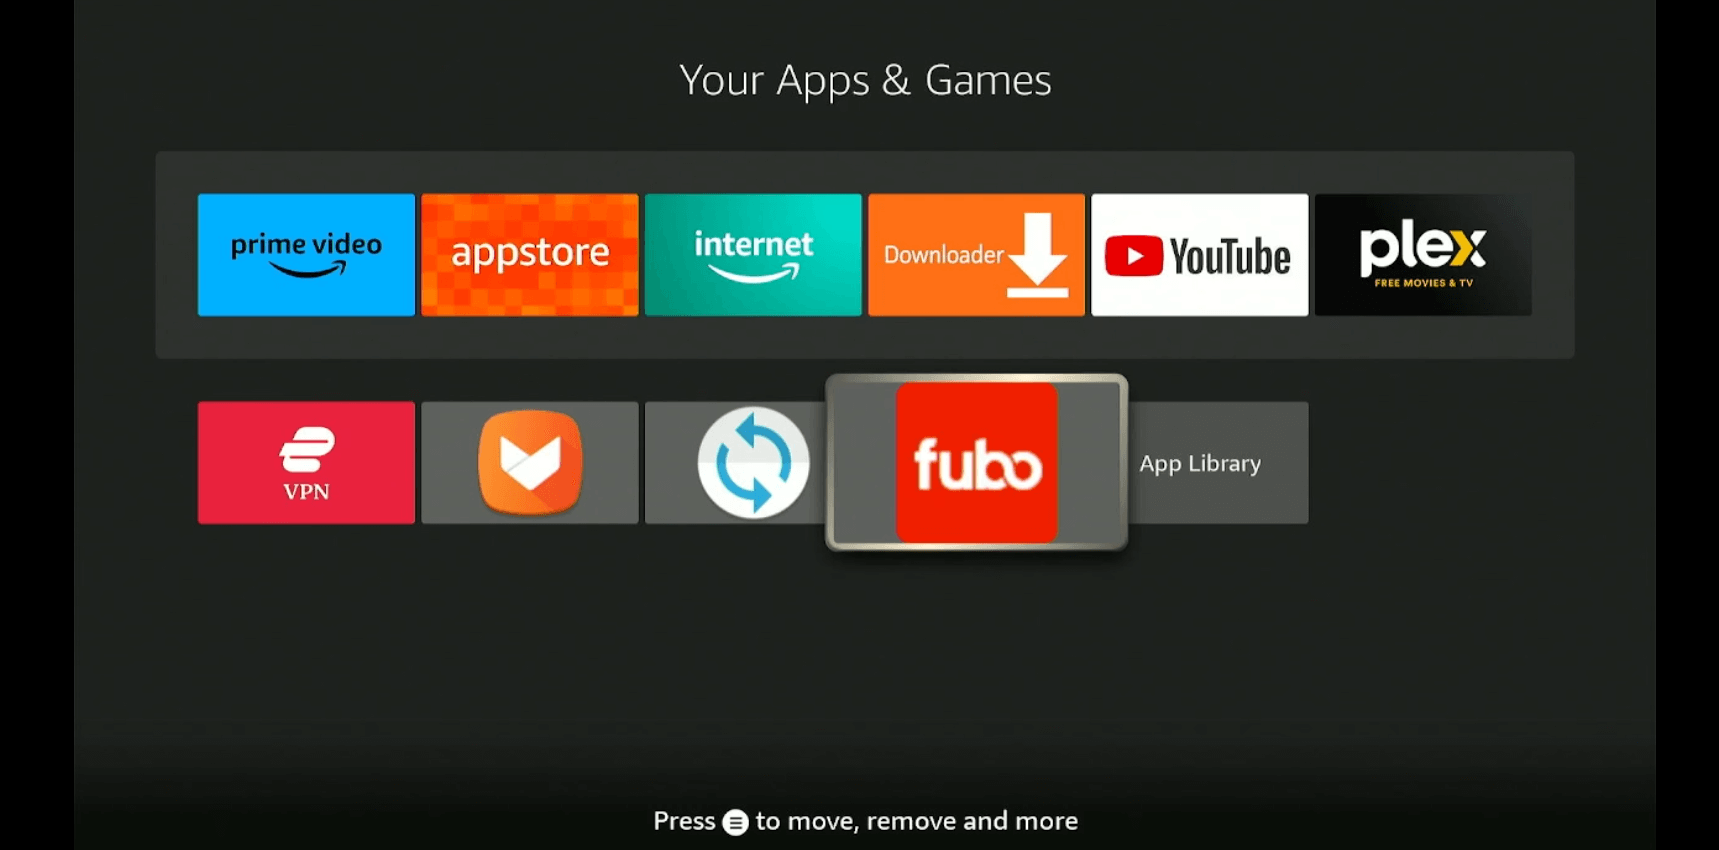 install-fubo-tv-on-firestick-using-downloader-app-31